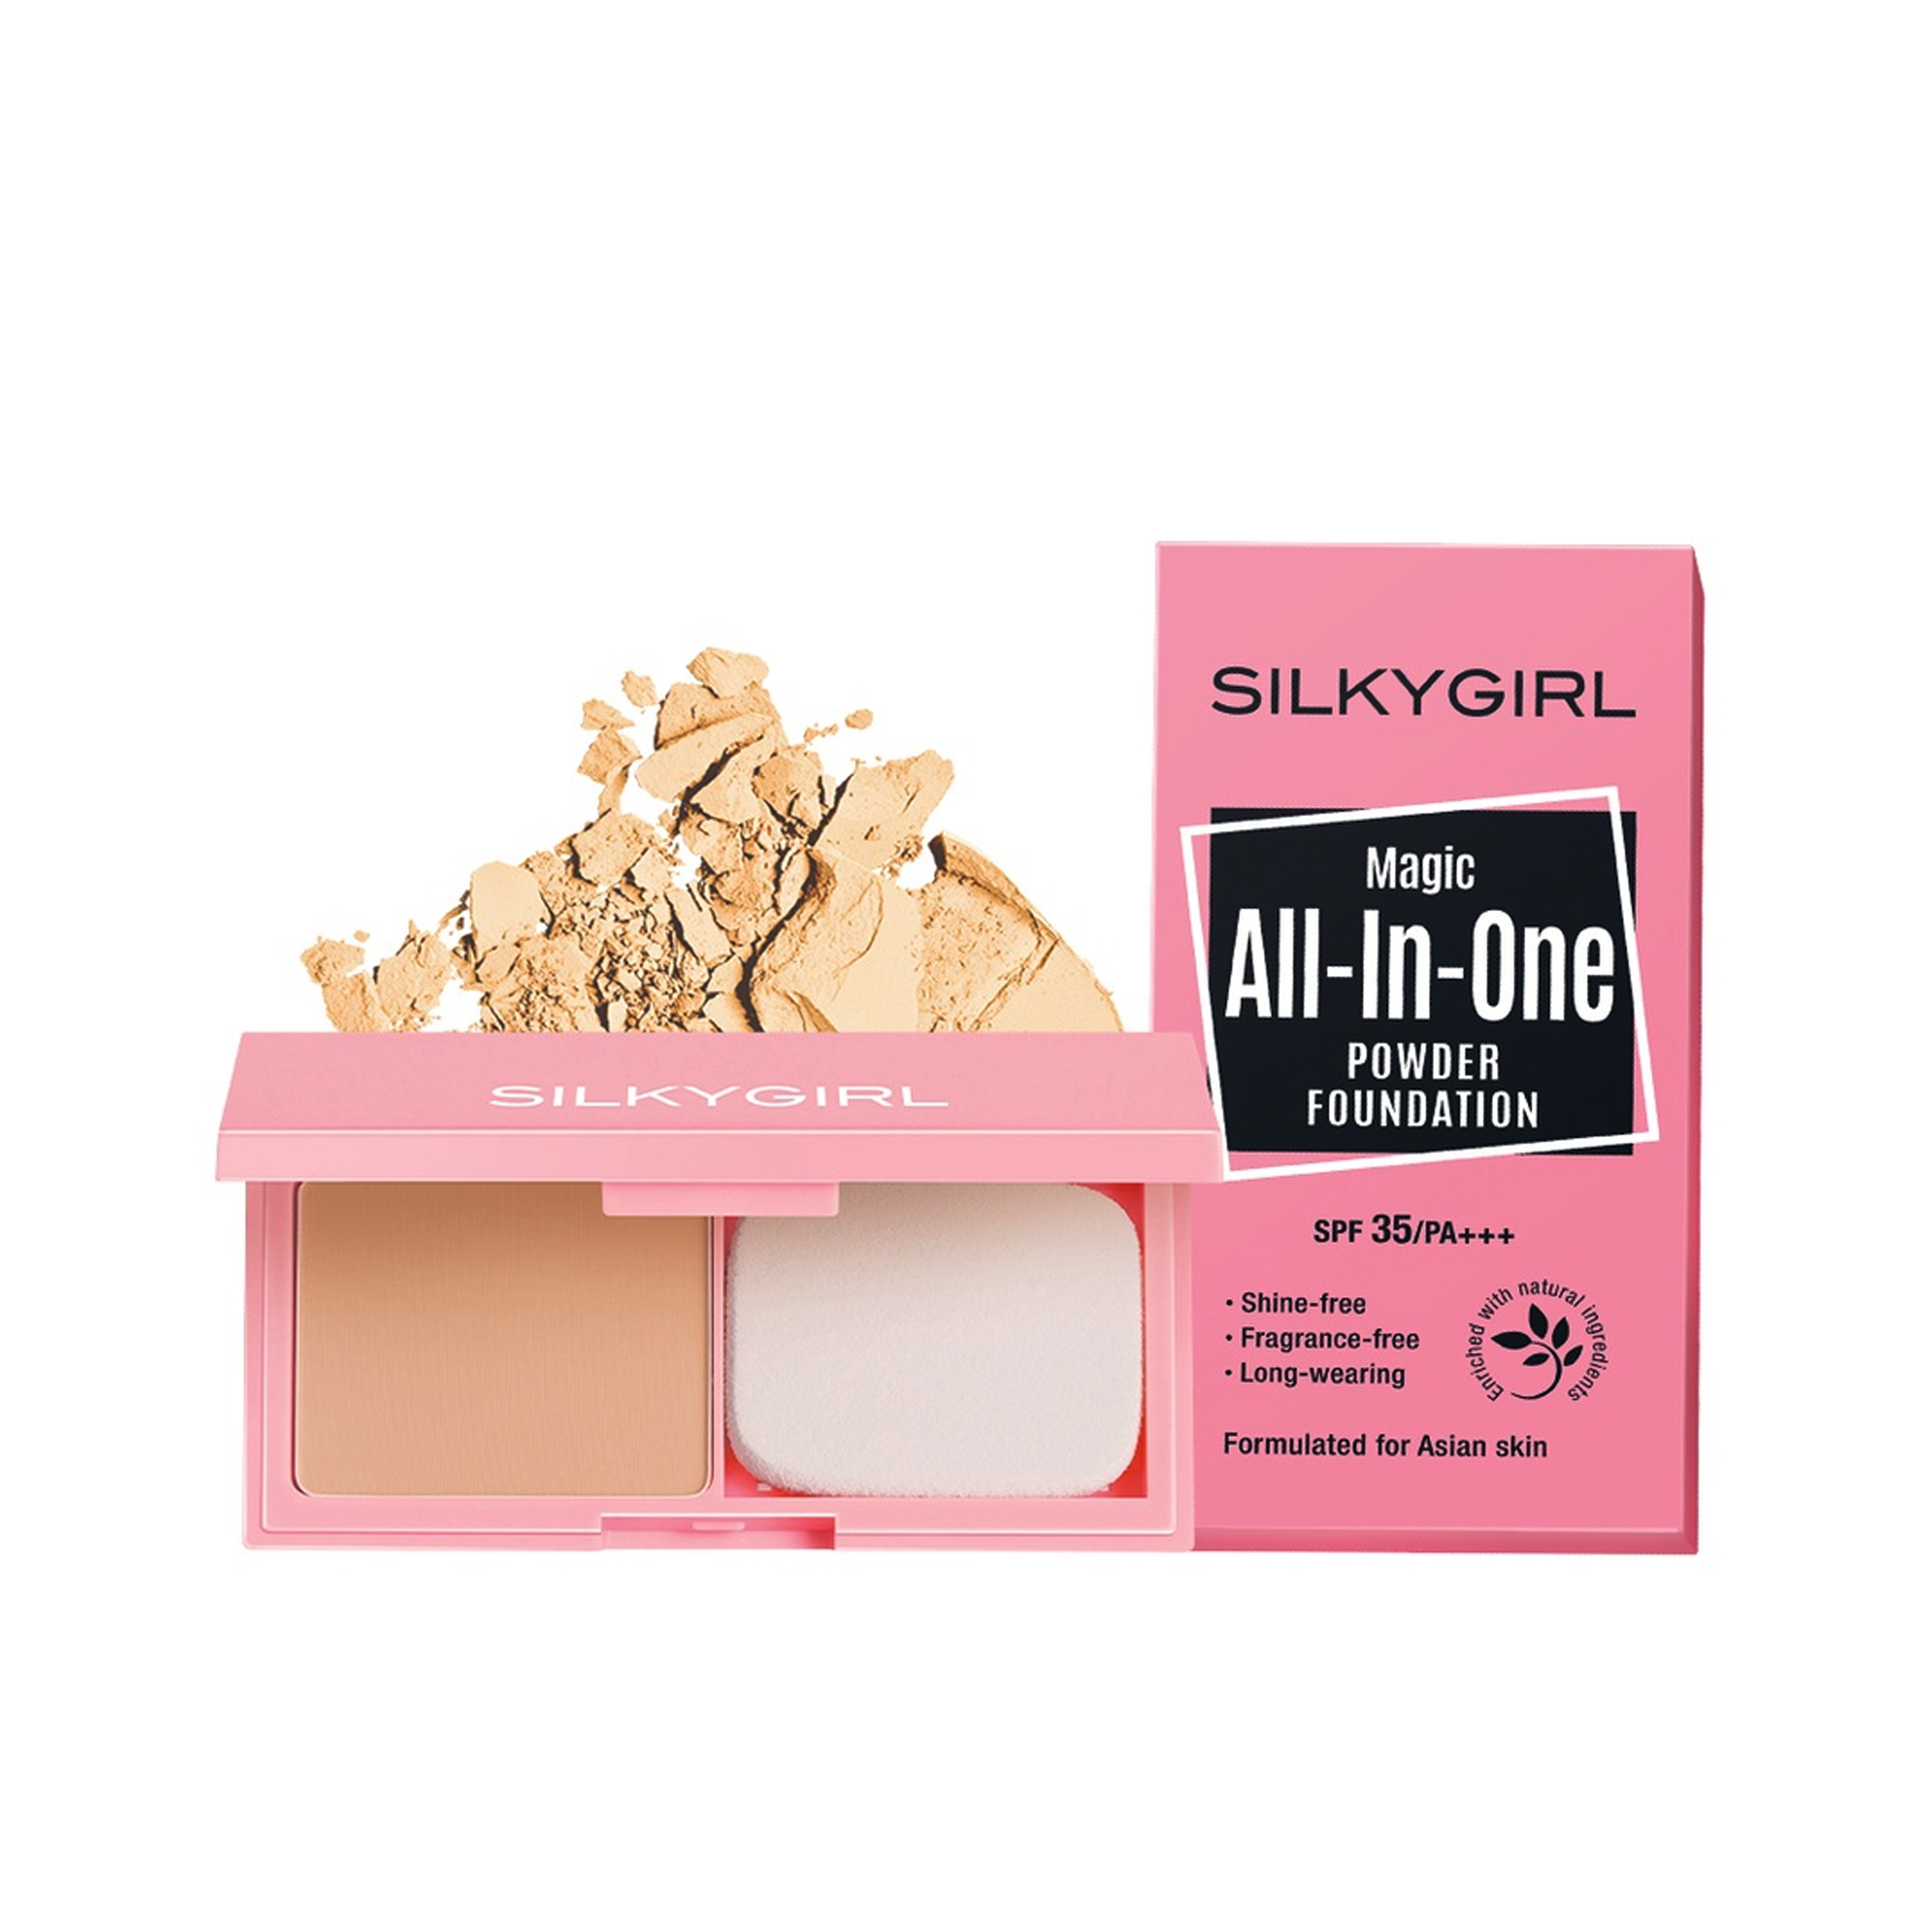 Silkygirl Silky Girl Magic All-In-One Powder Foundation Tersedia 4 Warna (01 Ivory 02 Natural Beige 03 Natural Buff 04 Medium)